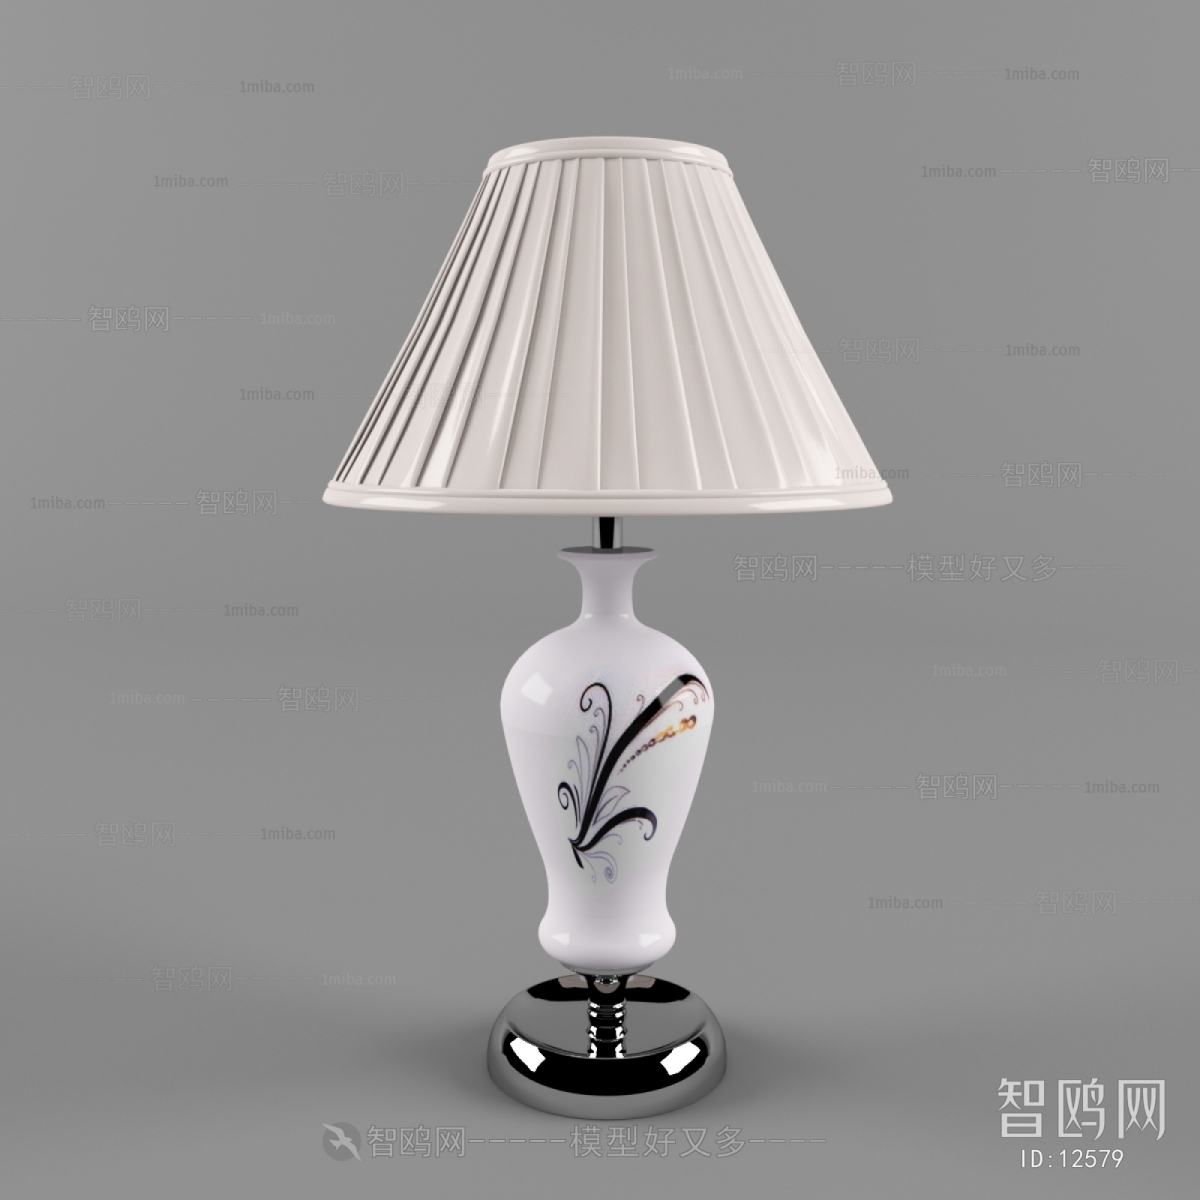 Idyllic Style New Chinese Style Table Lamp